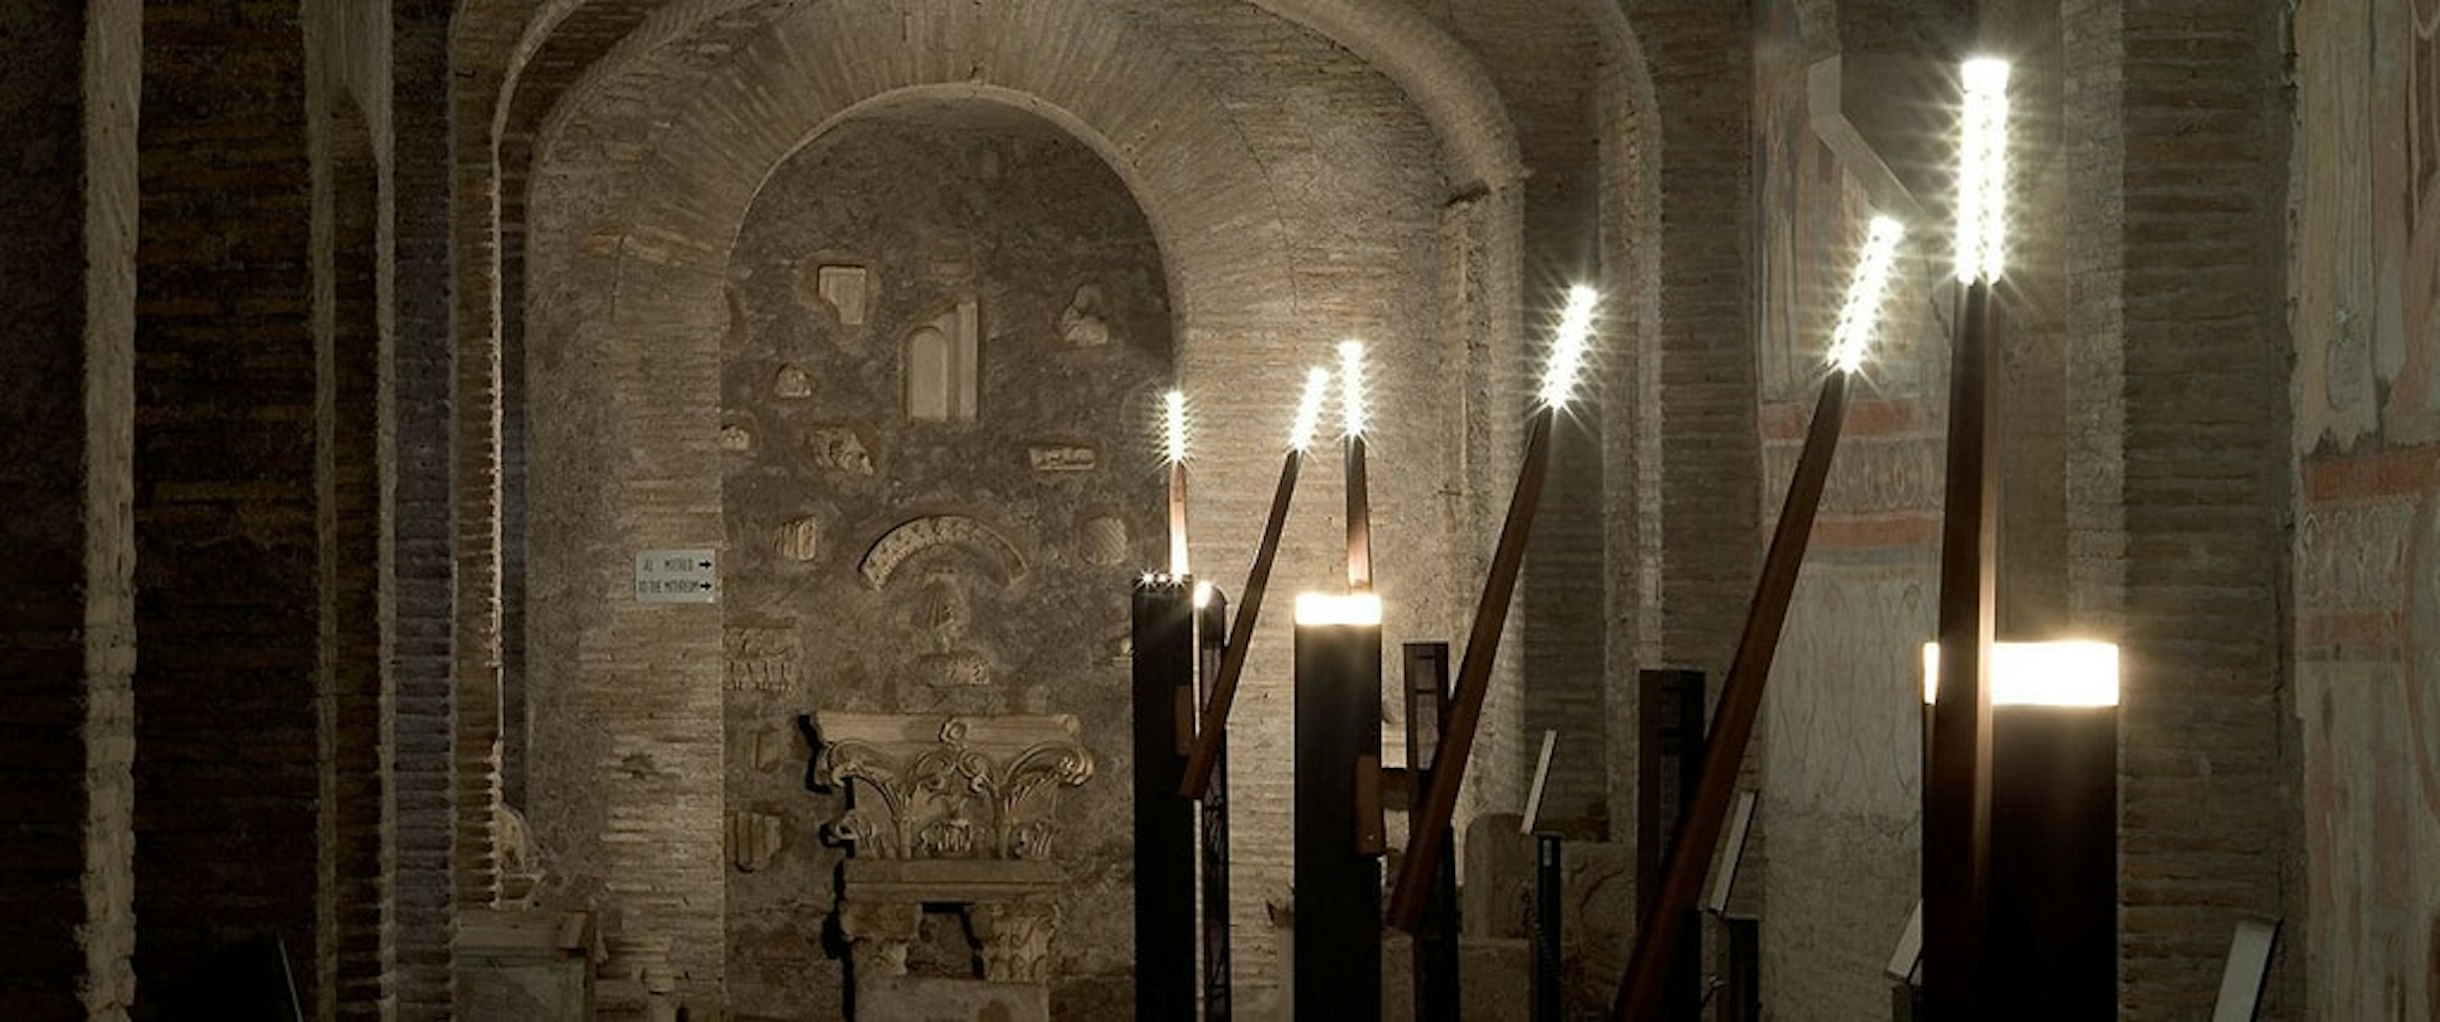 holy-places-basilica-san-clemente-roma-flos-07-1440x603